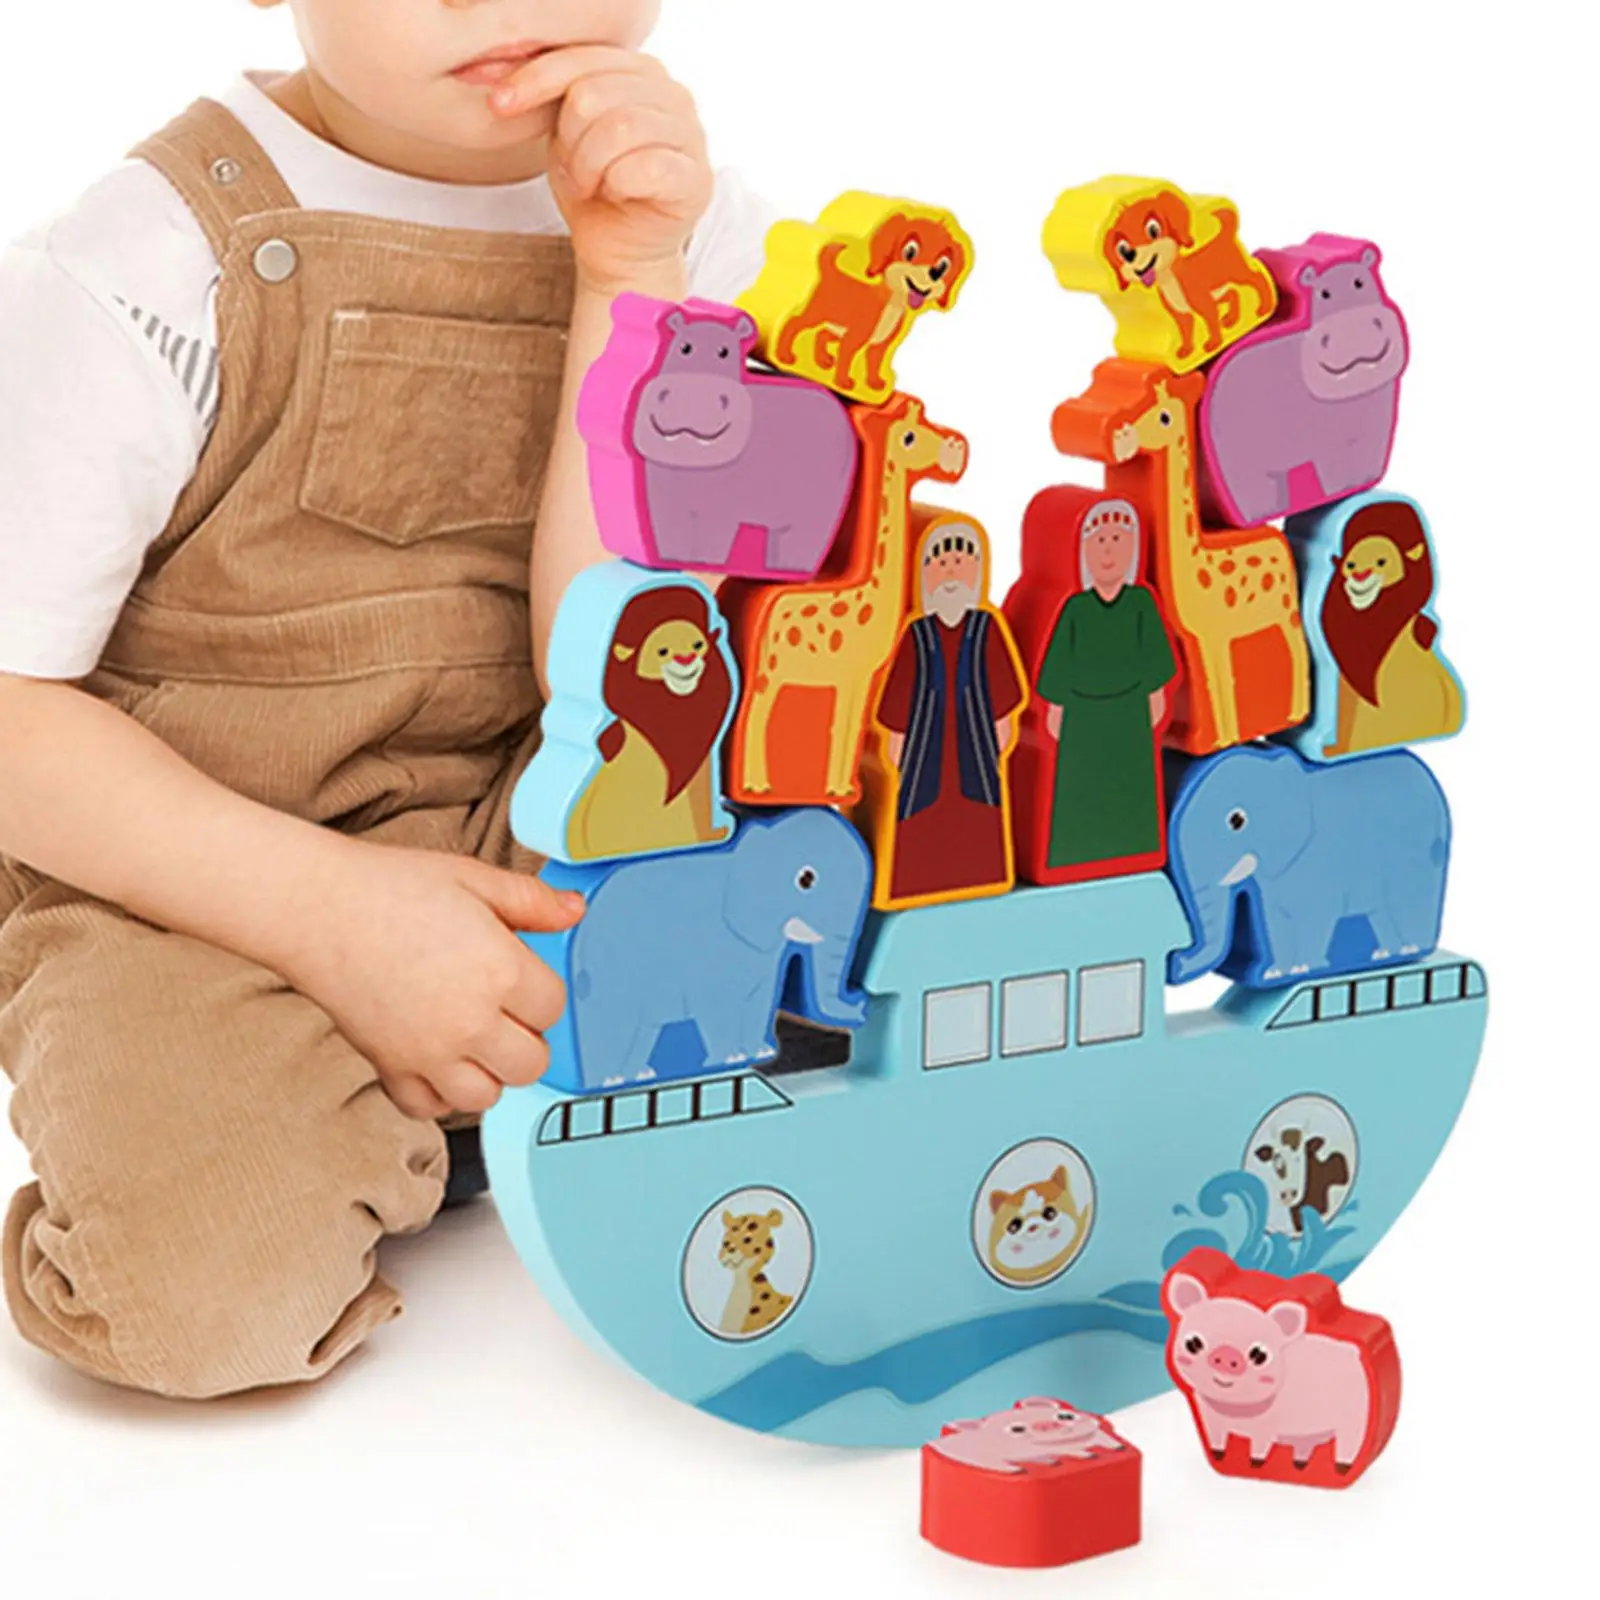 Montessori Wooden Balance Game Learning Building Toys Brain Development Preschool Game Motor Skills for Kids Toddler Gifts